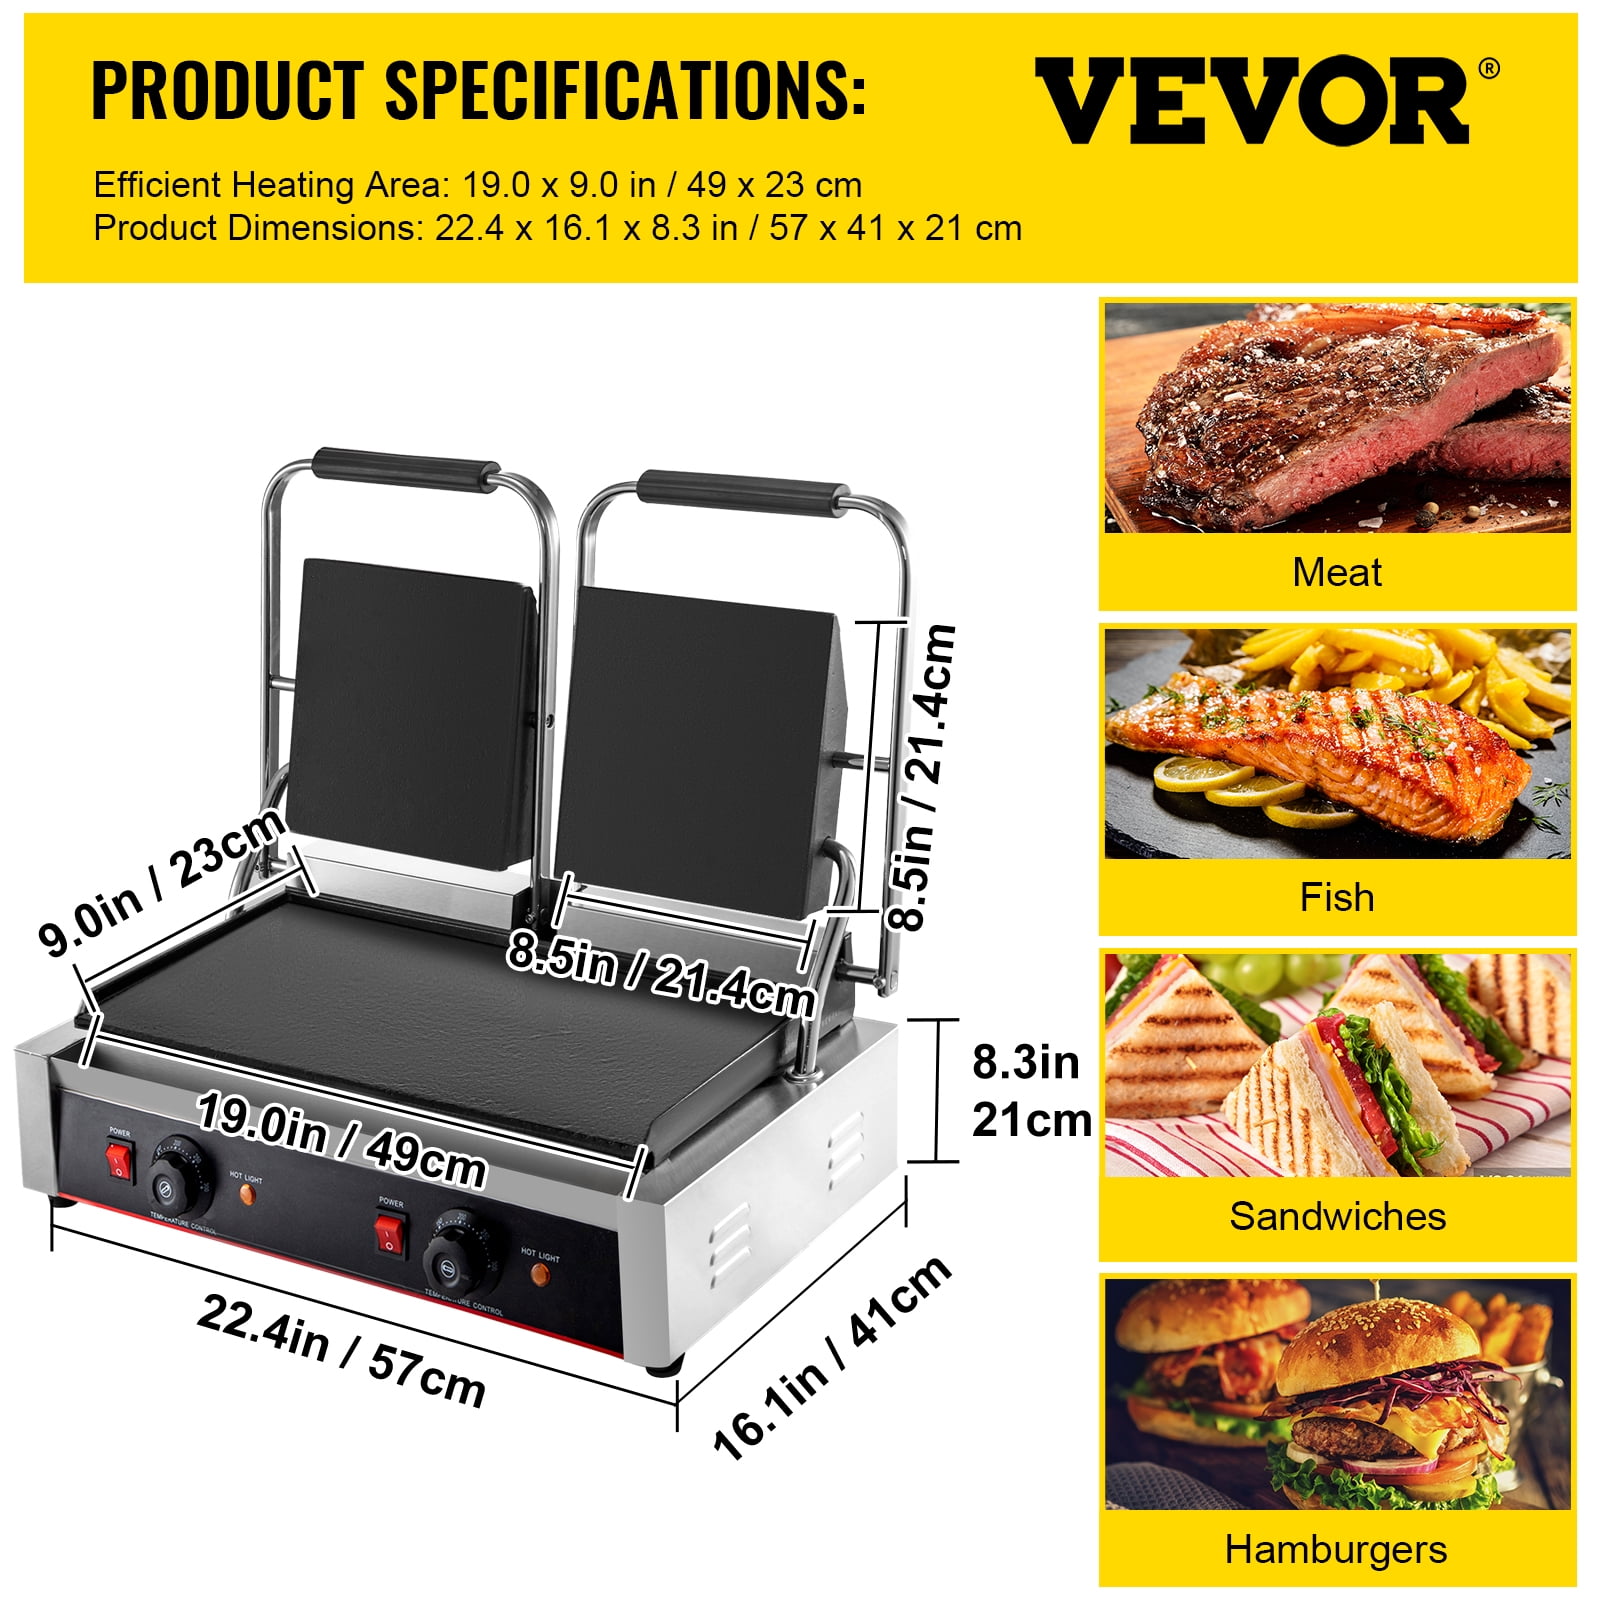 VEVOR Sandwich Pan Tostadora Press Maker Parrilla de pan eléctrica 1800W